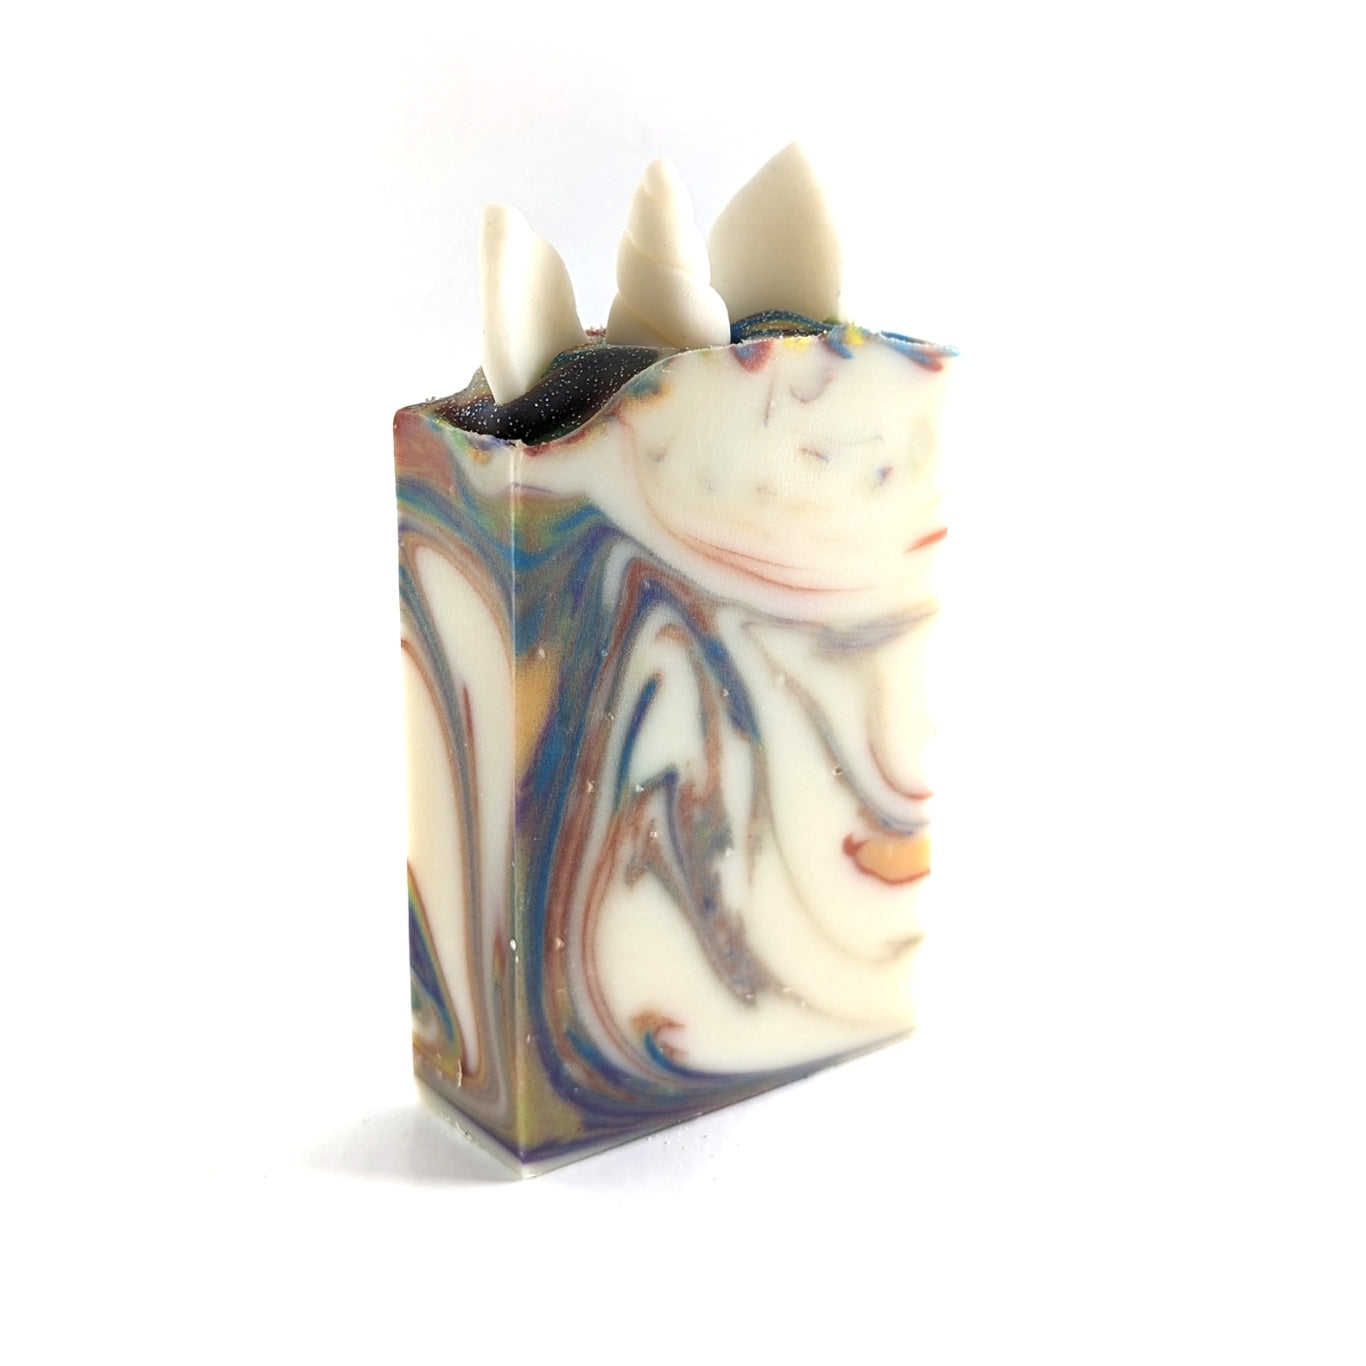 Unicorn soap